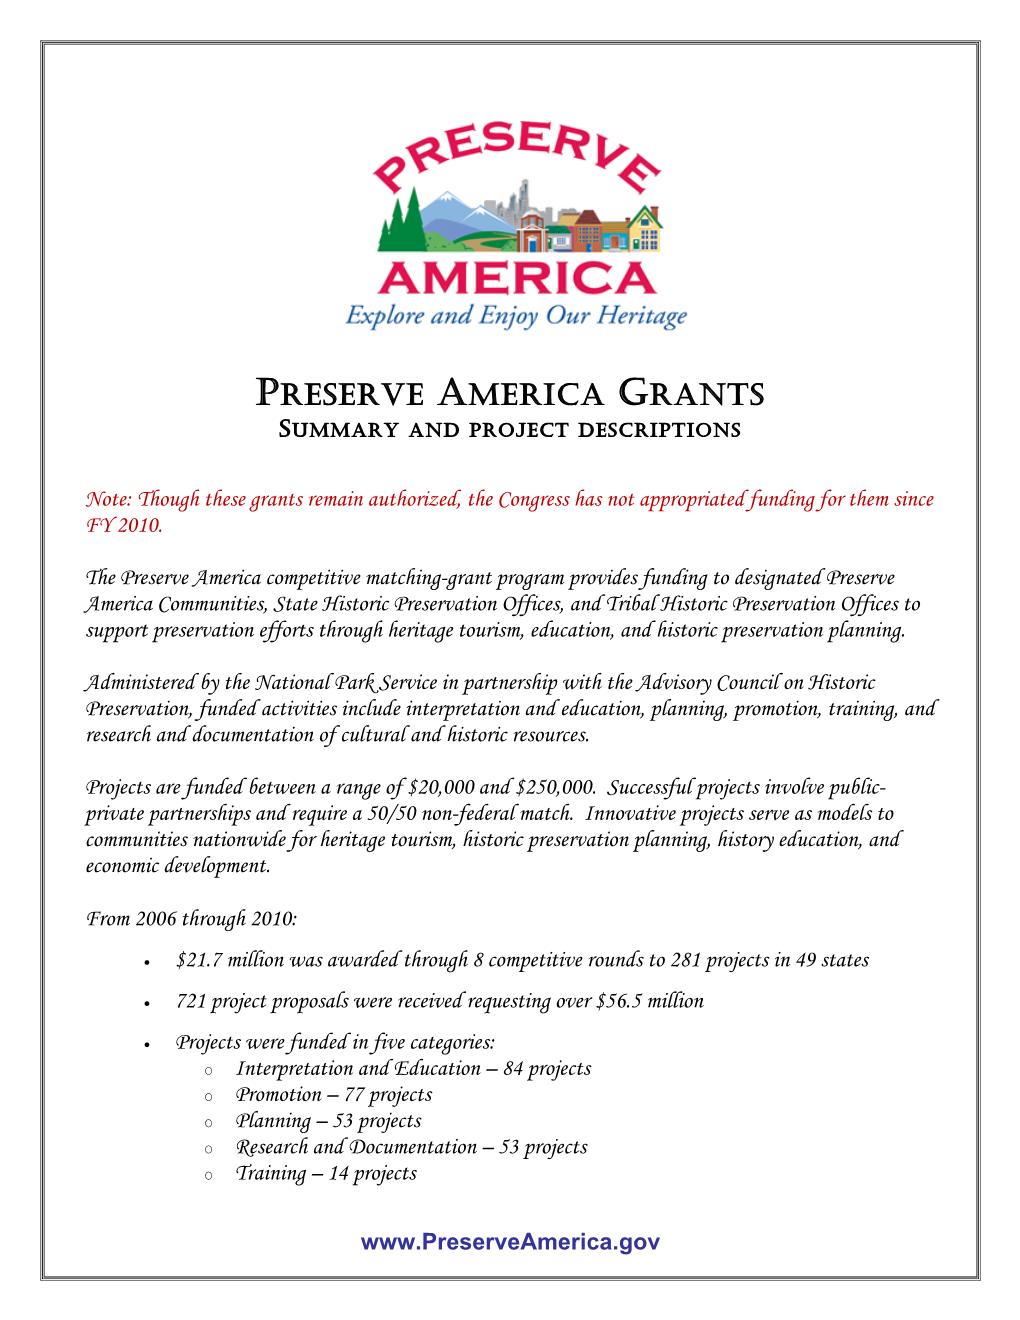 Preserve America Grants Summary and Project Descriptions